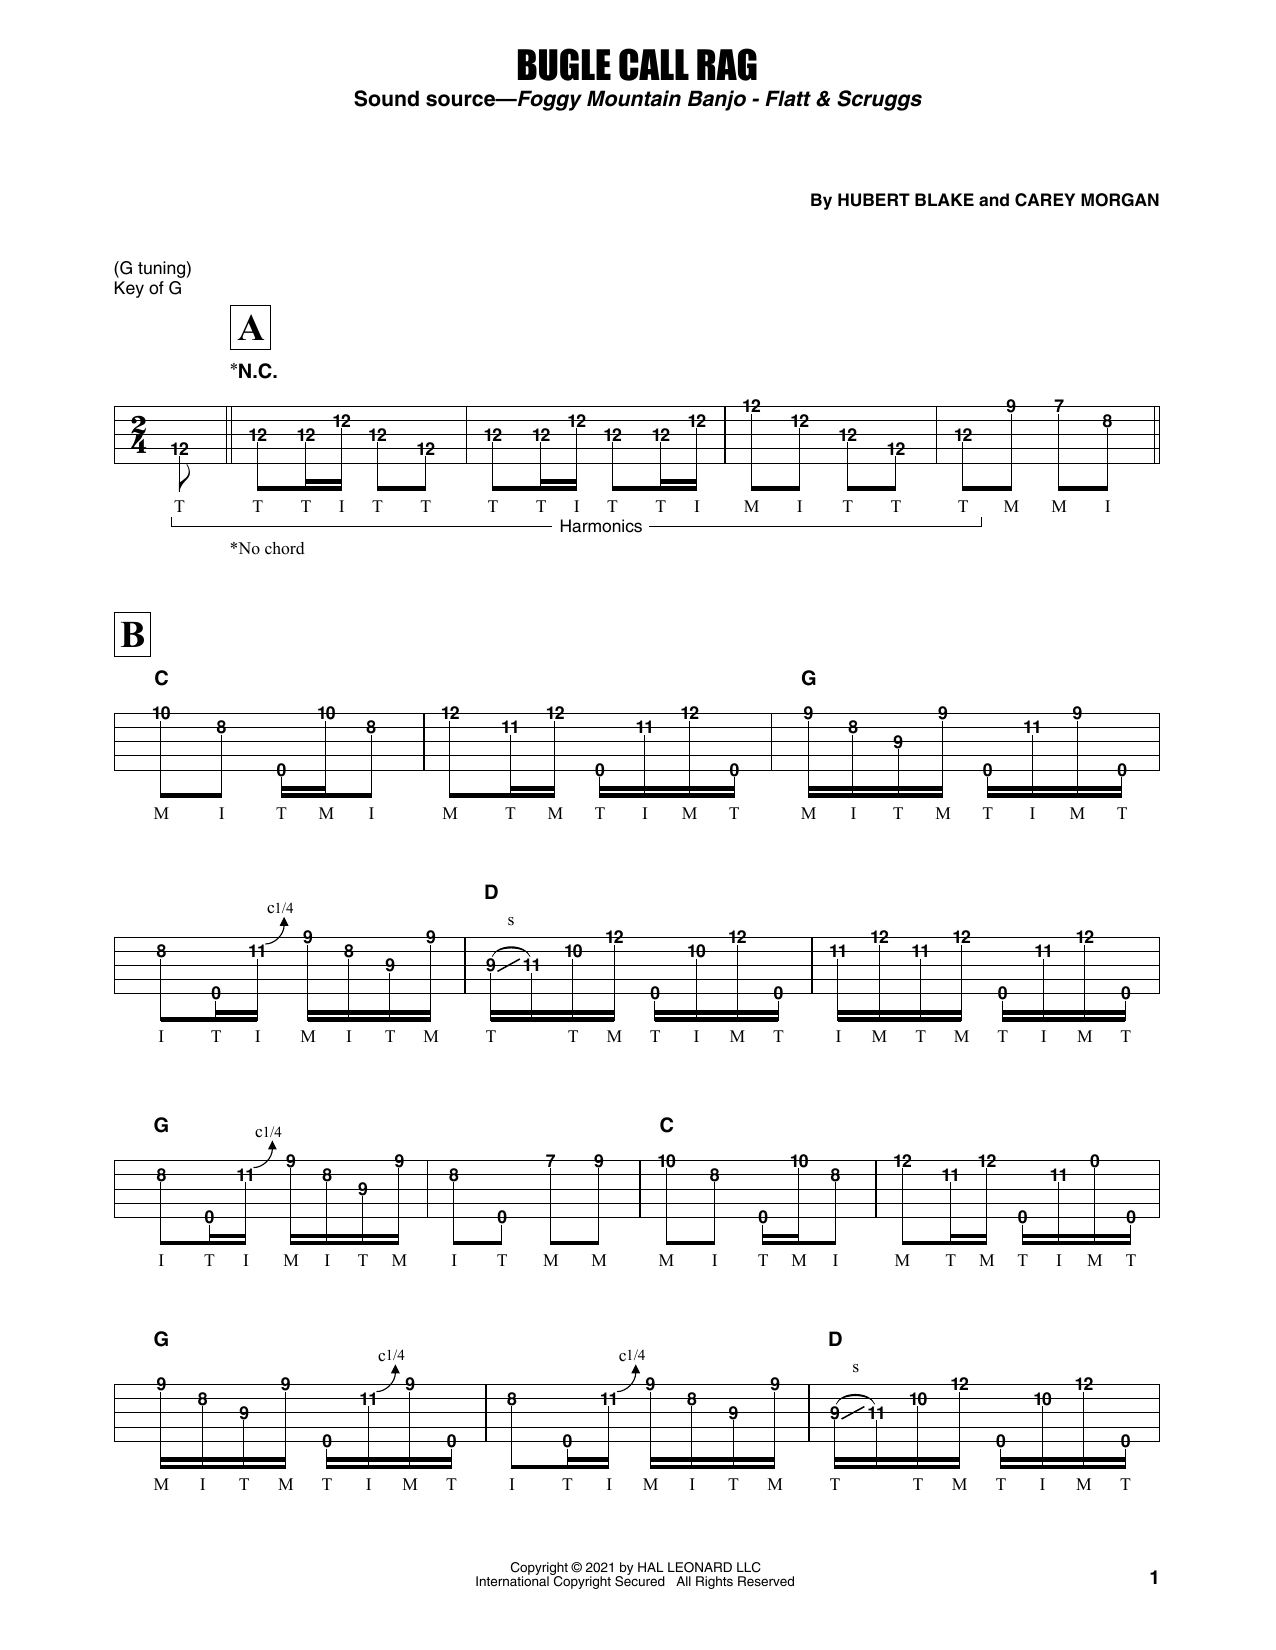 Flatt & Scruggs Bugle Call Rag Sheet Music Notes & Chords for Banjo Tab - Download or Print PDF